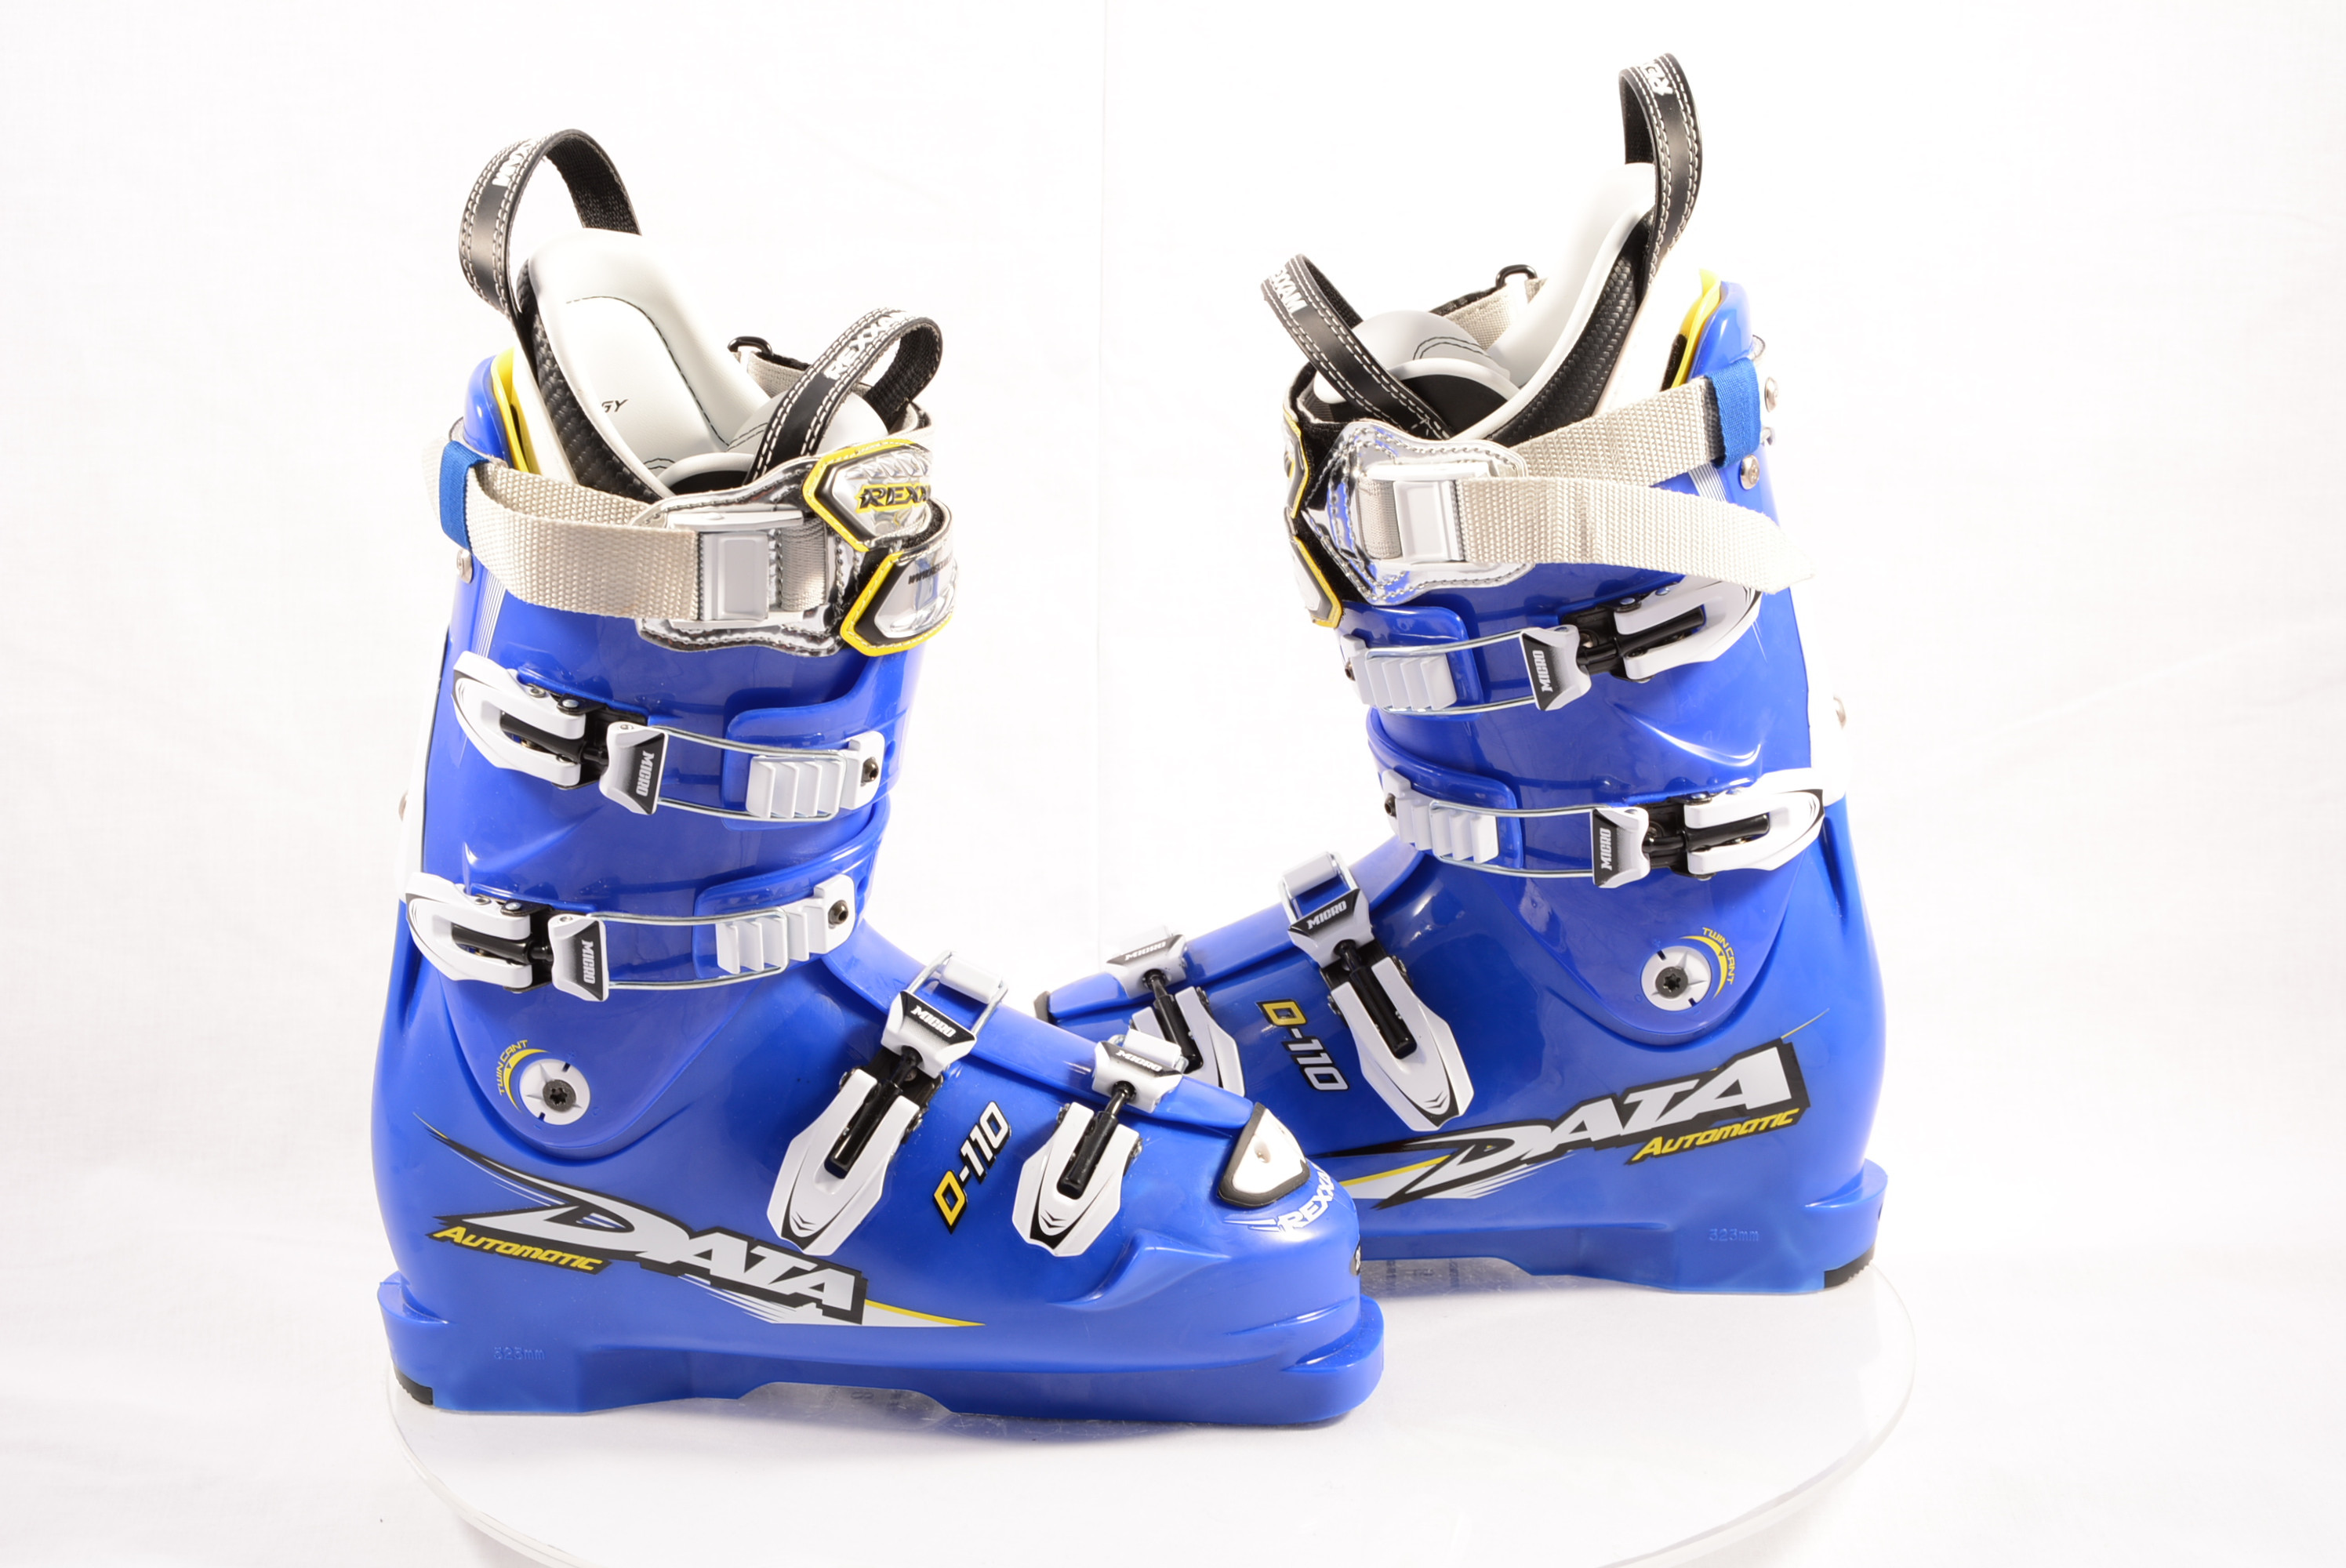 rexxam ski boots